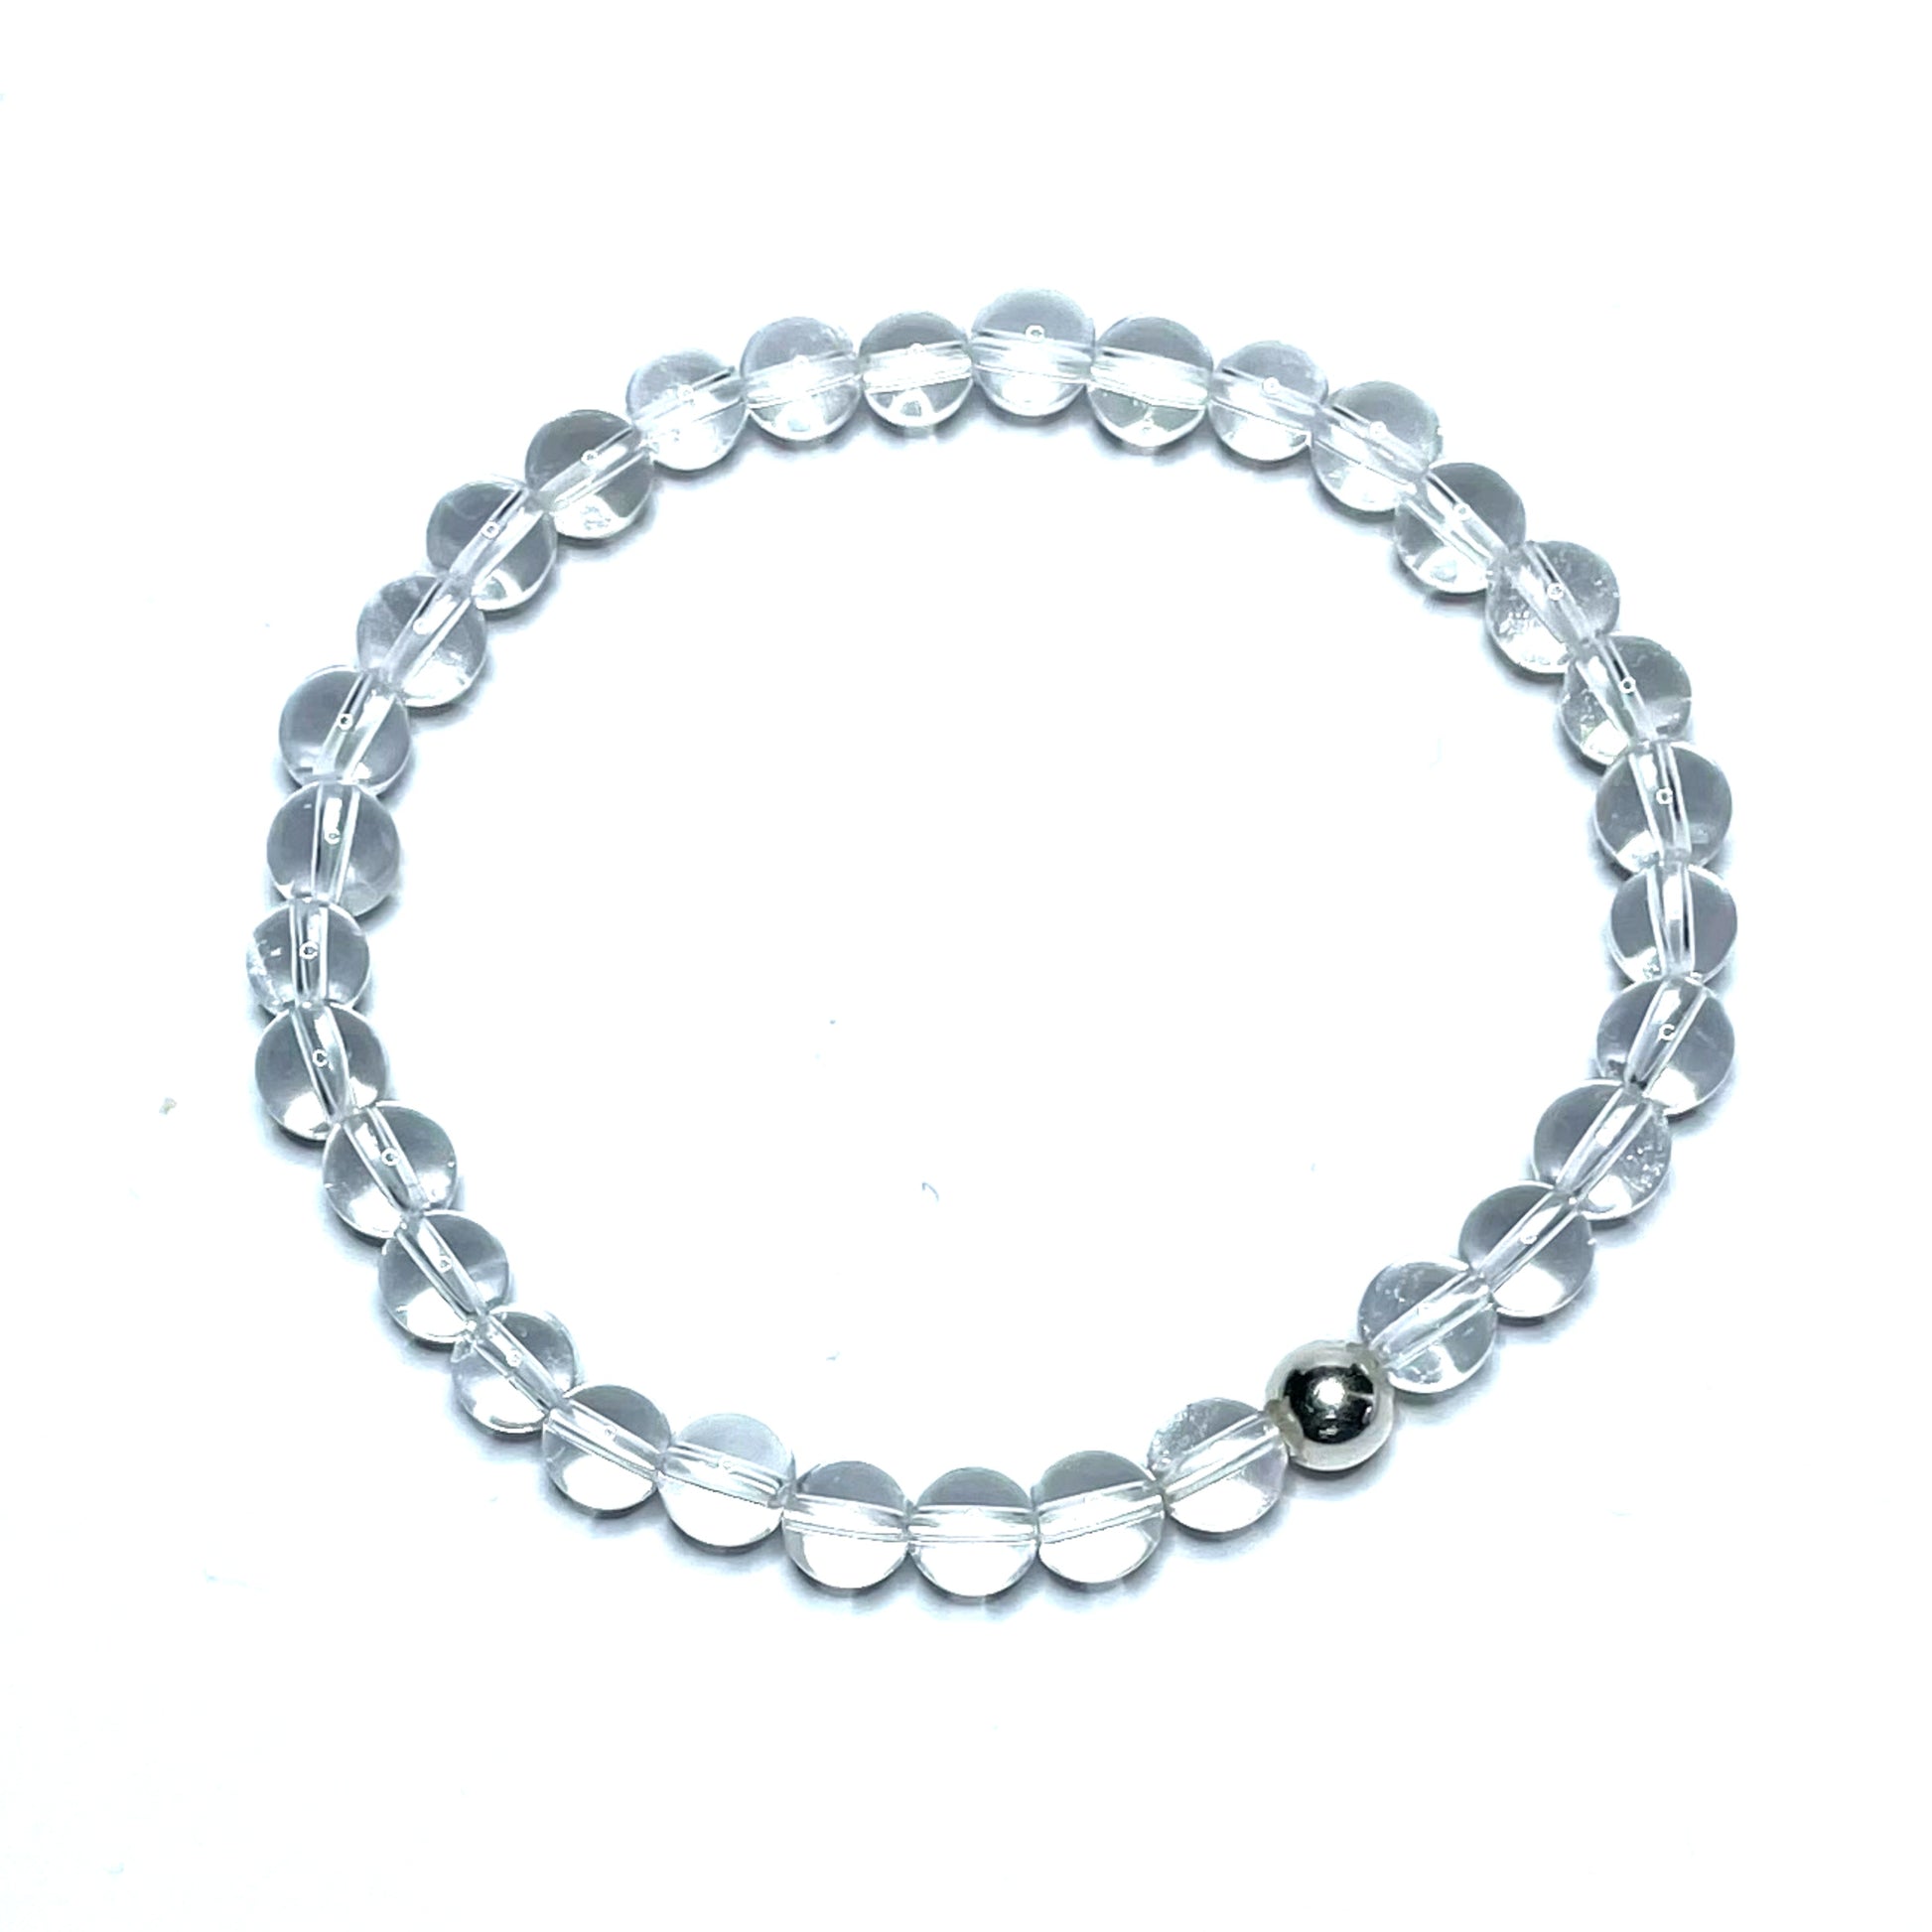 Clear quartz gemstone bracelet